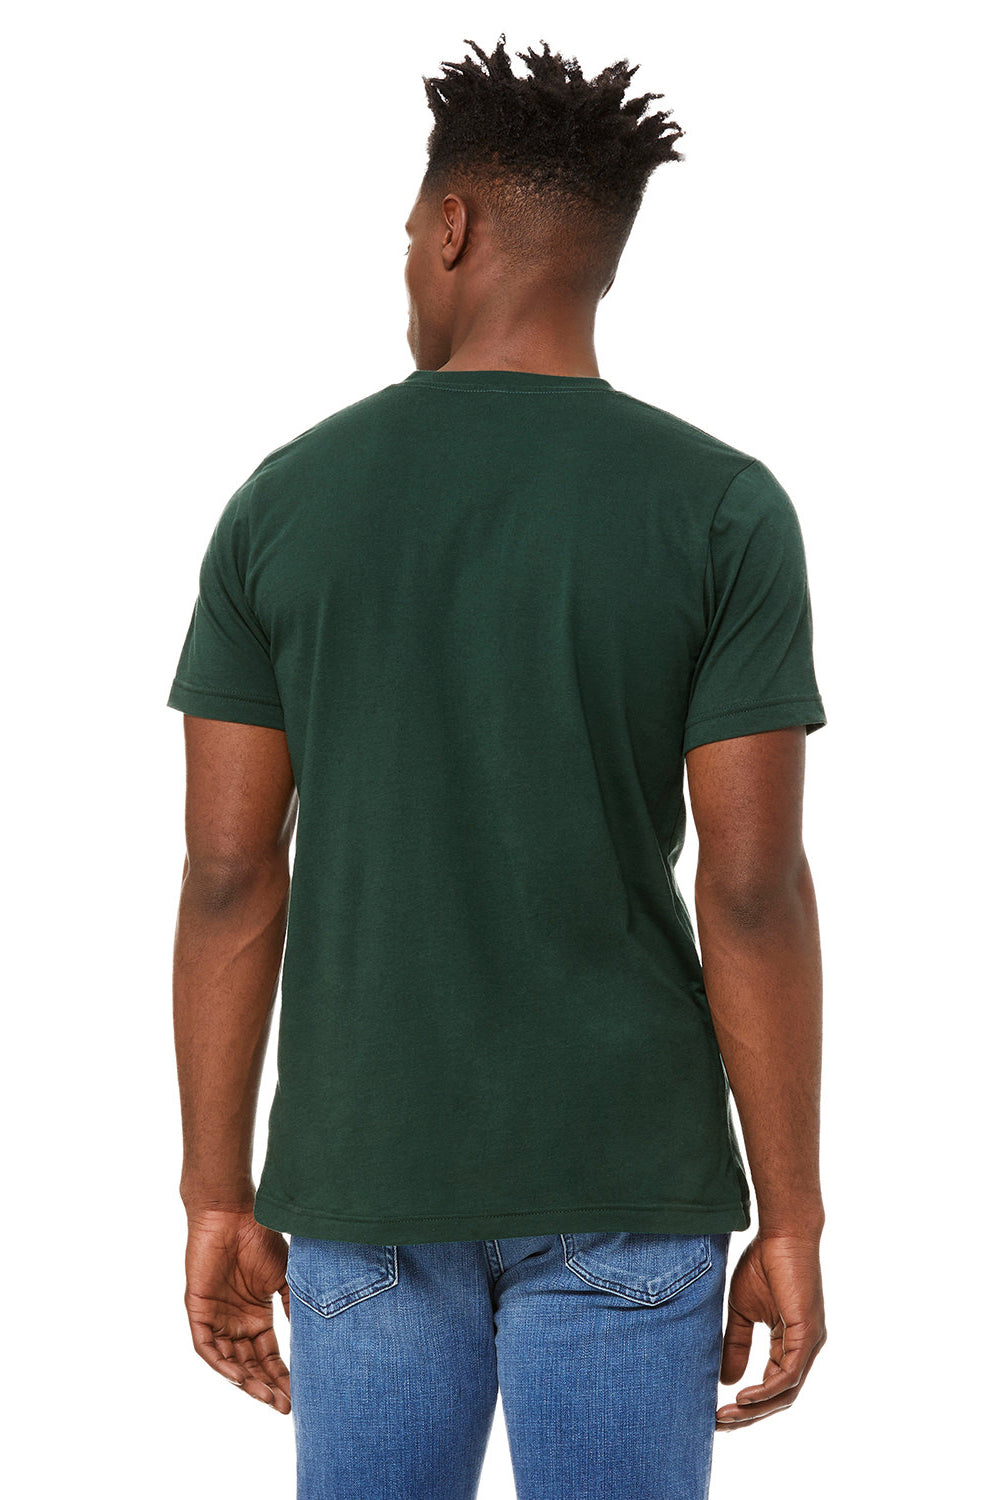 Bella + Canvas BC3005/3005/3655C Mens Jersey Short Sleeve V-Neck T-Shirt Forest Green Model Back